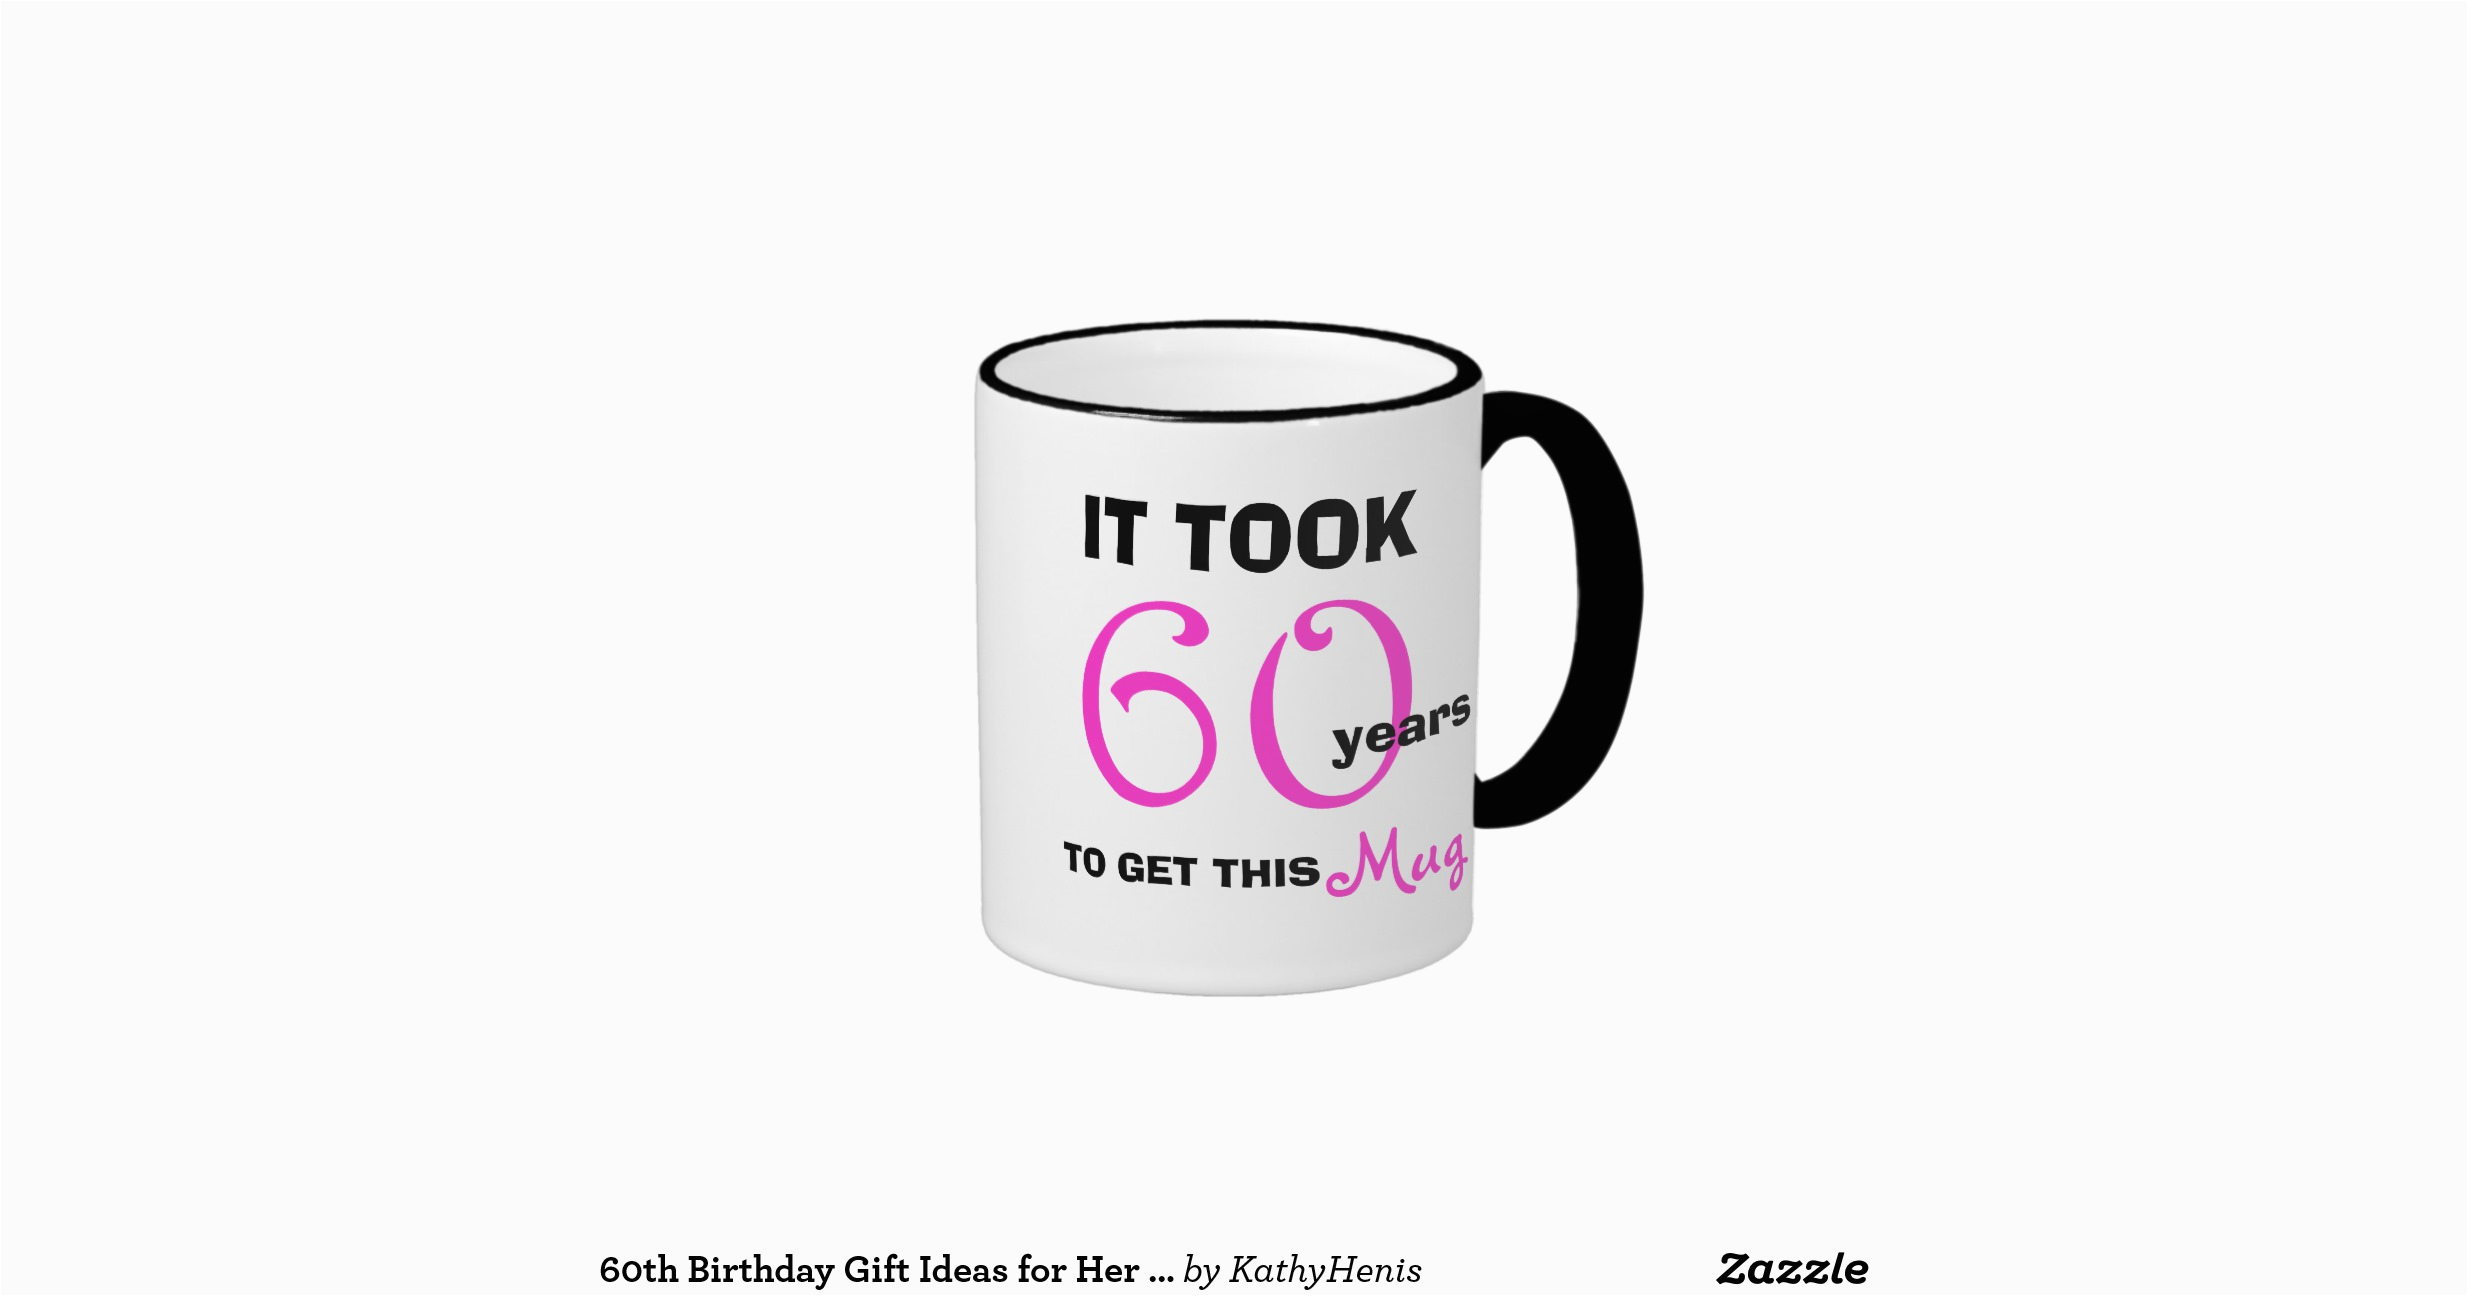 60th birthday gift ideas for her mug funny